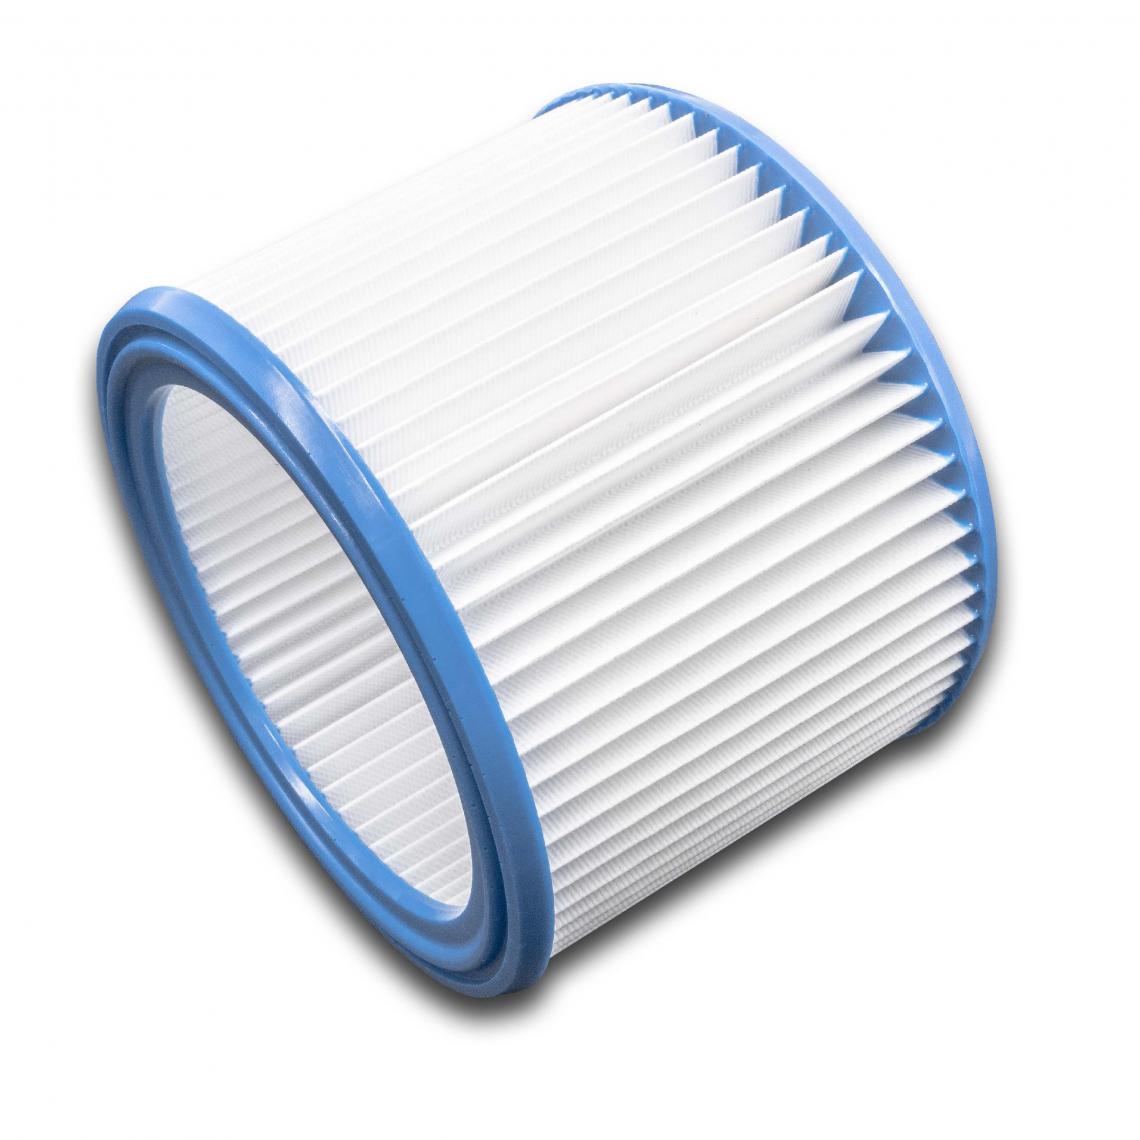 Vhbw - vhbw Set de filtres 10x Filtre plissé compatible avec WAP Turbo SSR, XL, XL-25, XL-E aspirateur à sec ou humide - Filtre à cartouche - Accessoire entretien des sols